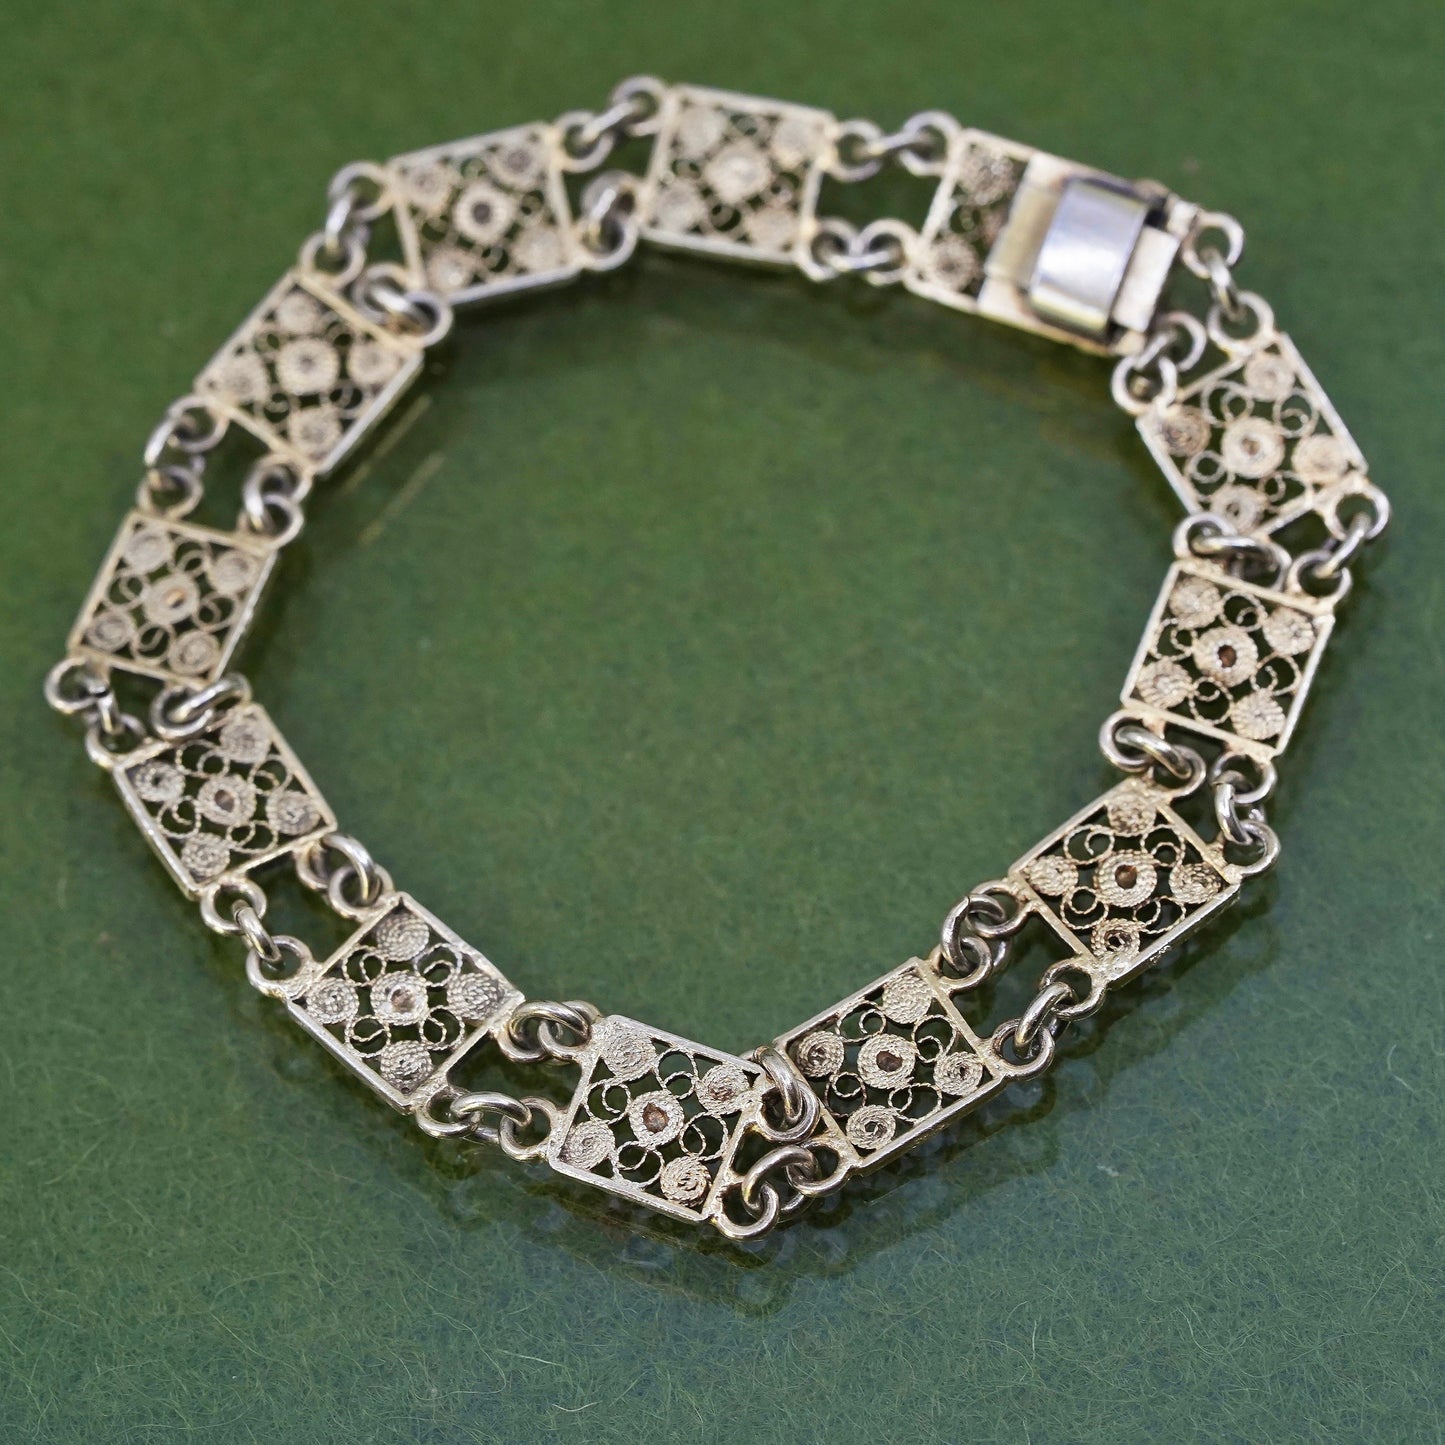 6.5", vintage Italian sterling silver bracelet, 800 filigree flower link chain